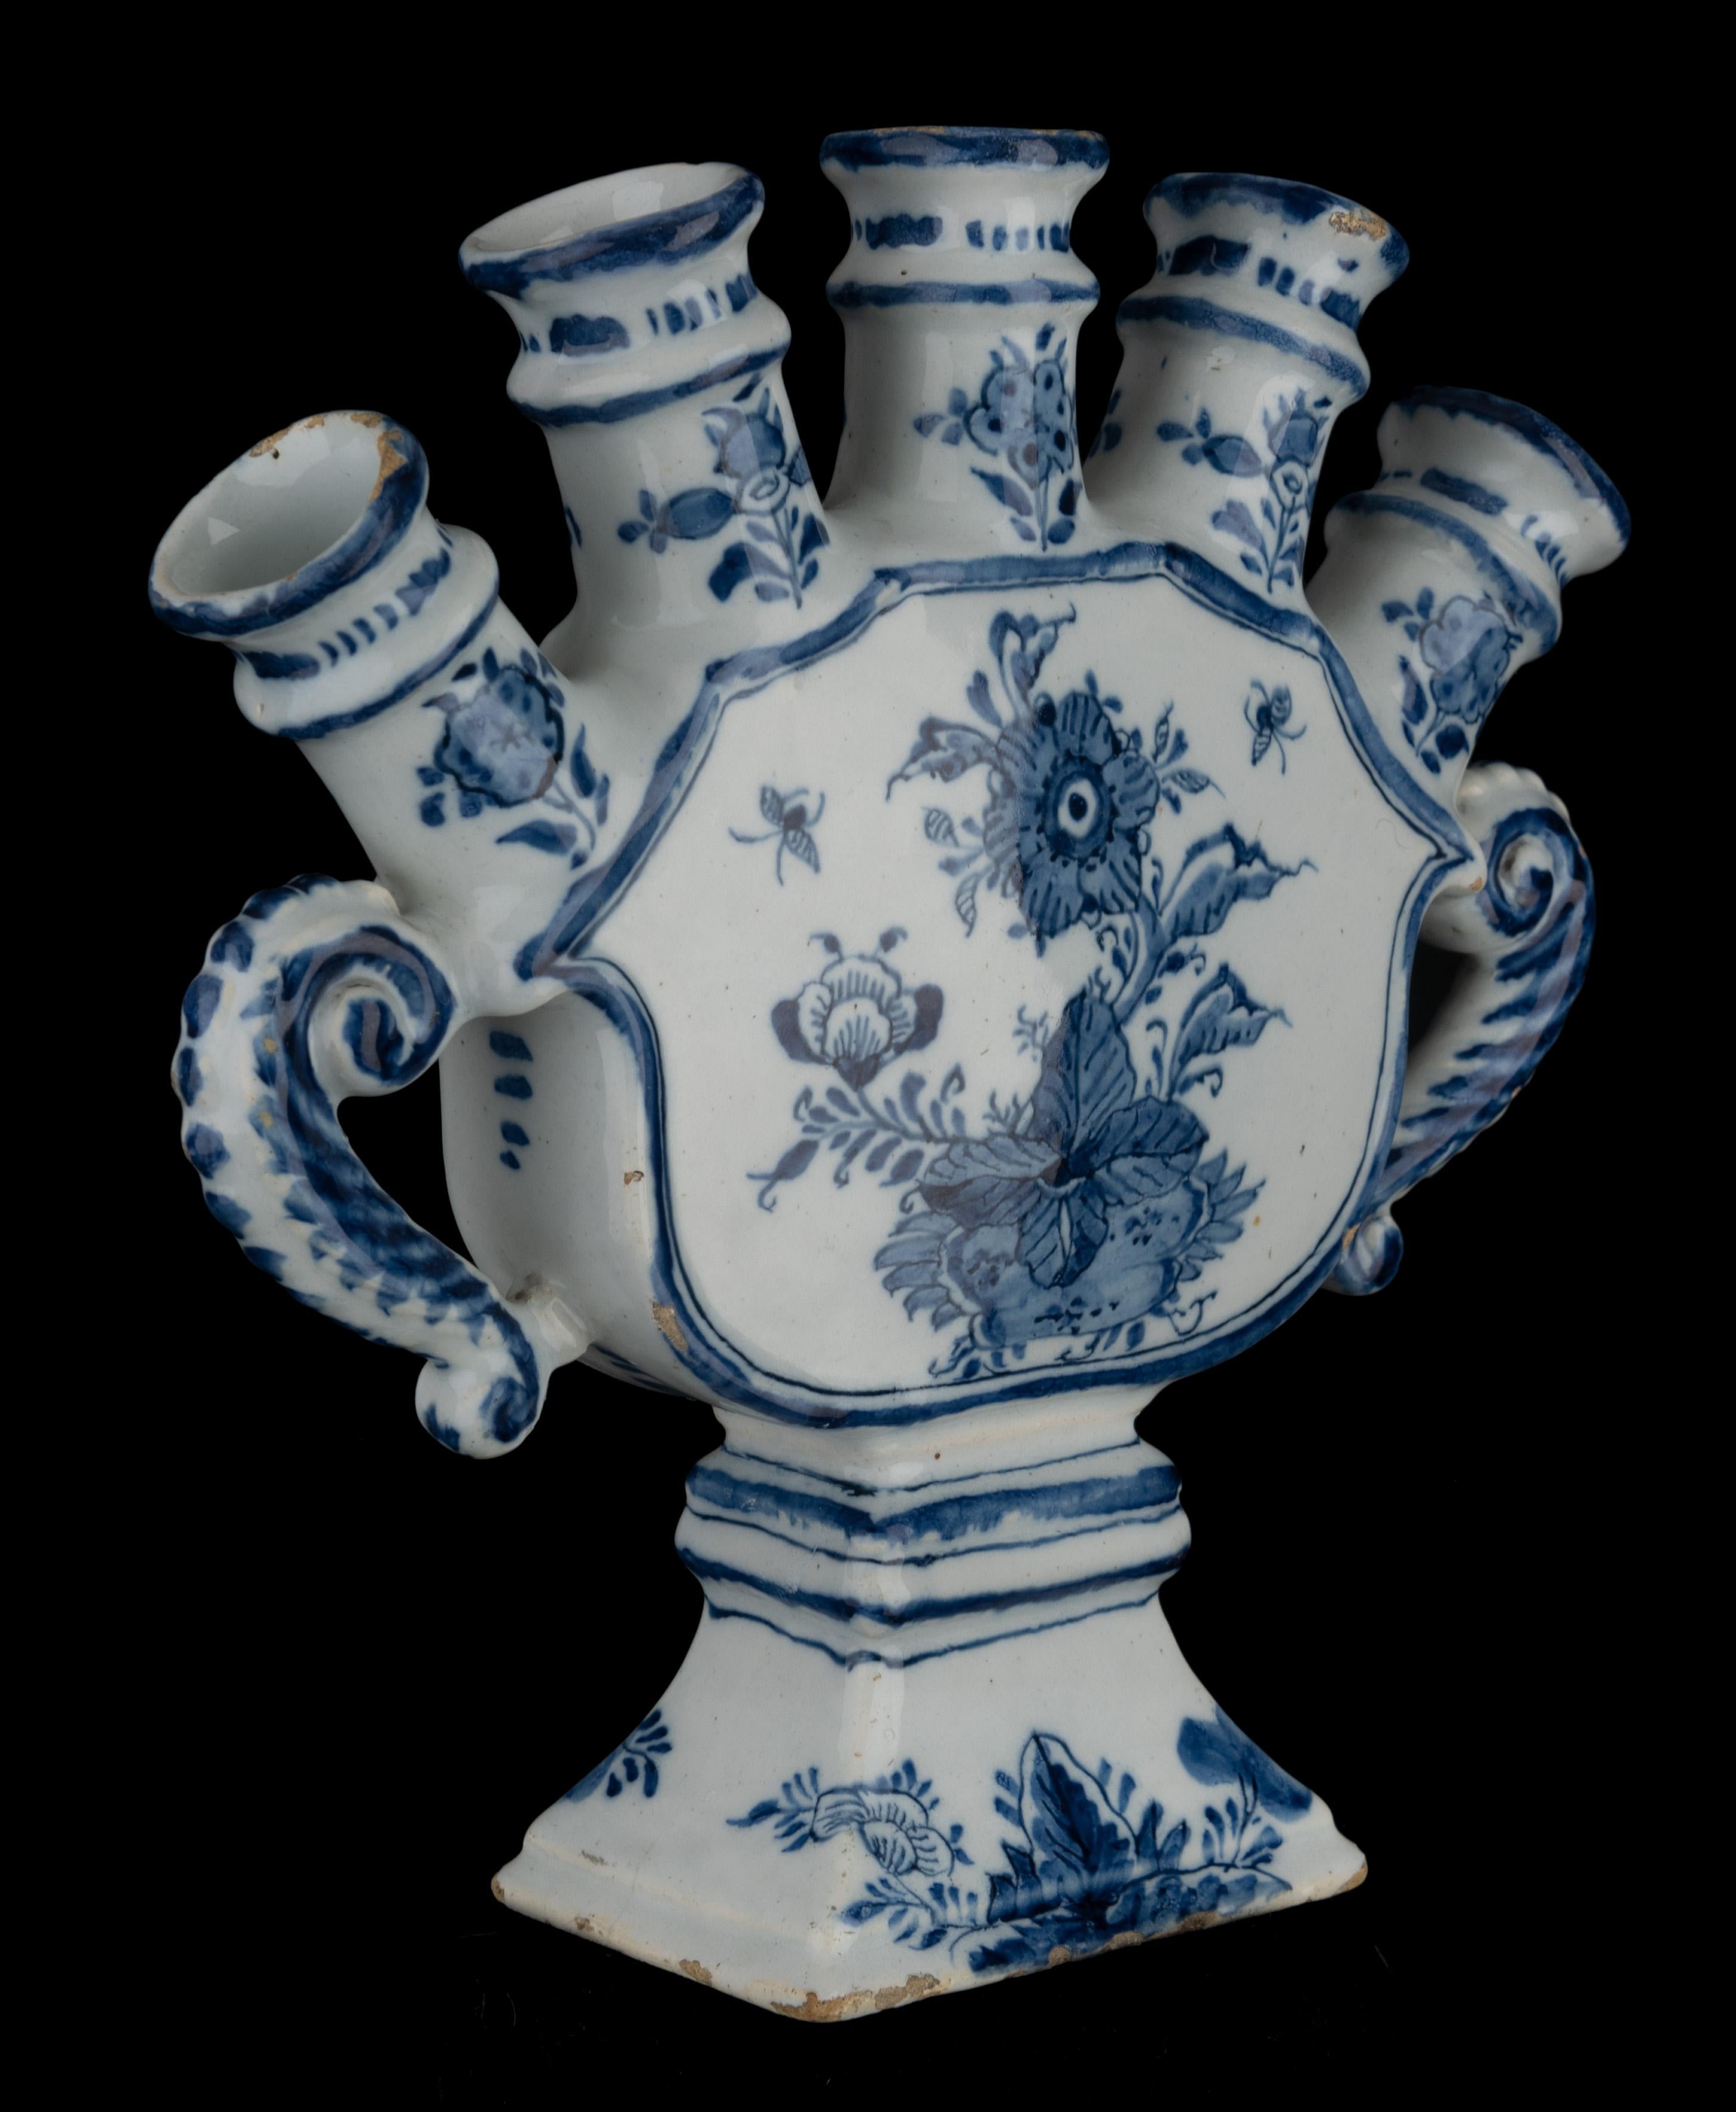 Dutch Delft Blue and White Flower Vase with Spouts 1720-1730 Tulip Vase For Sale